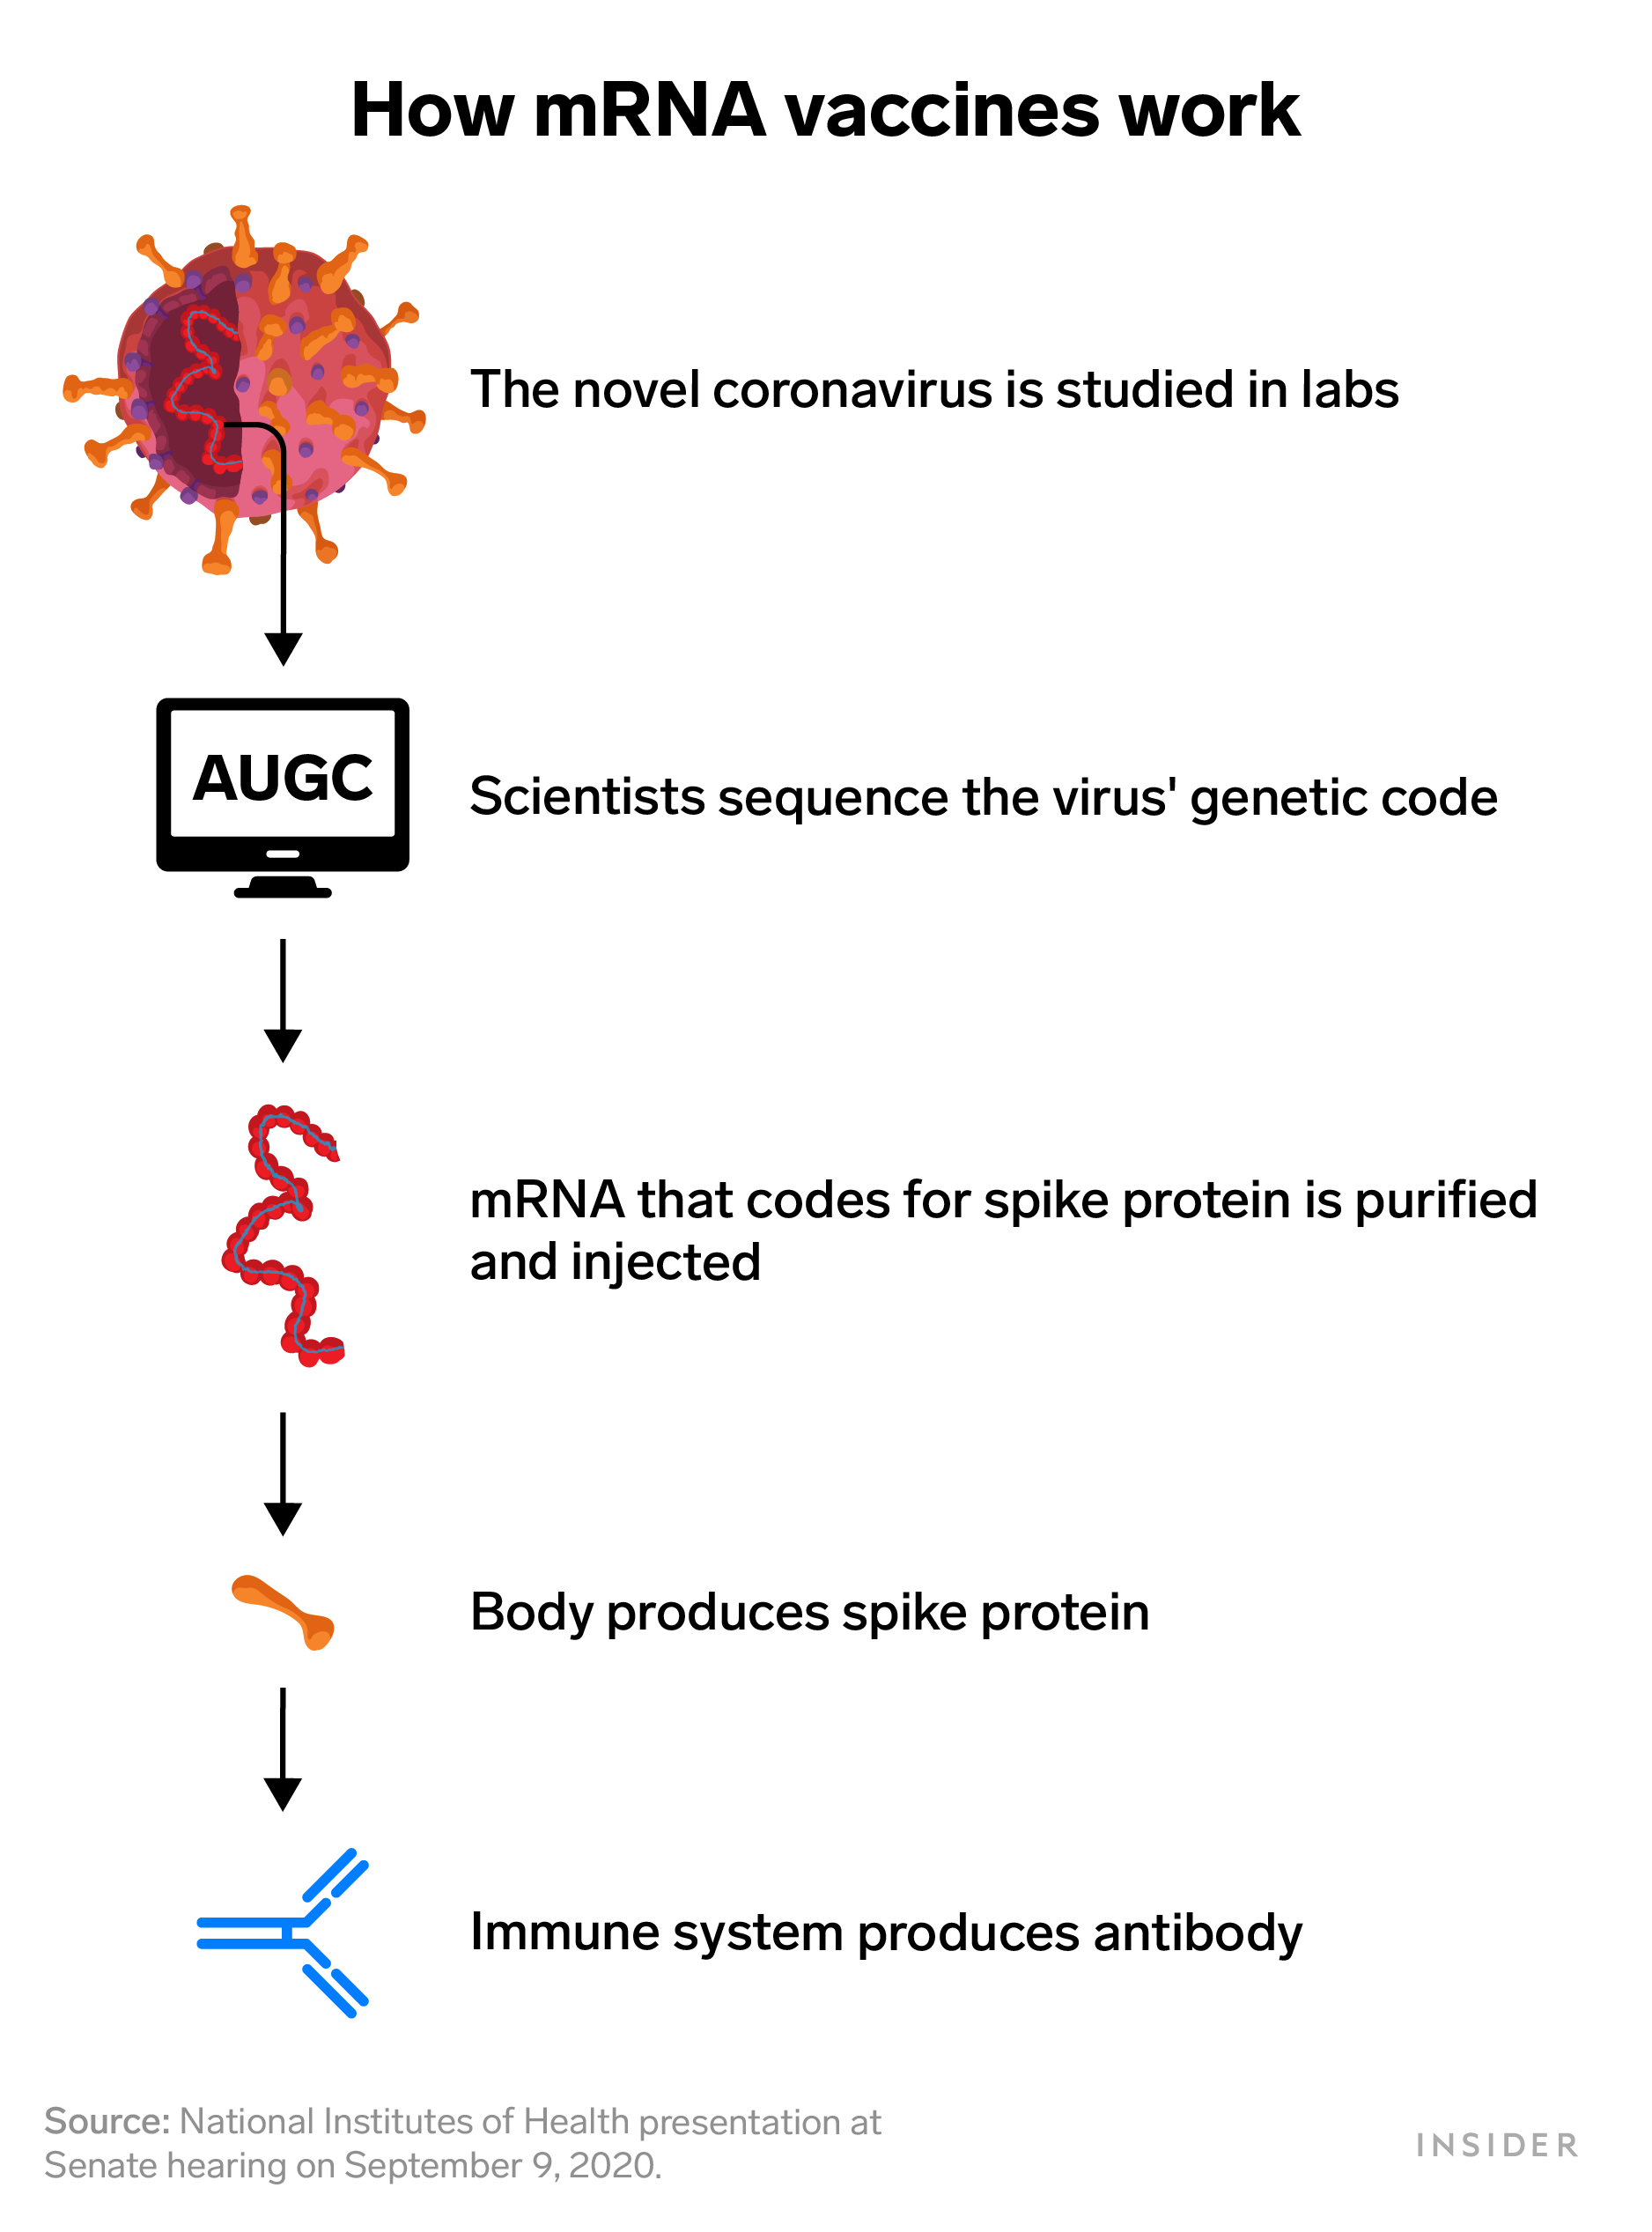 how mRNA vaccines work infographic